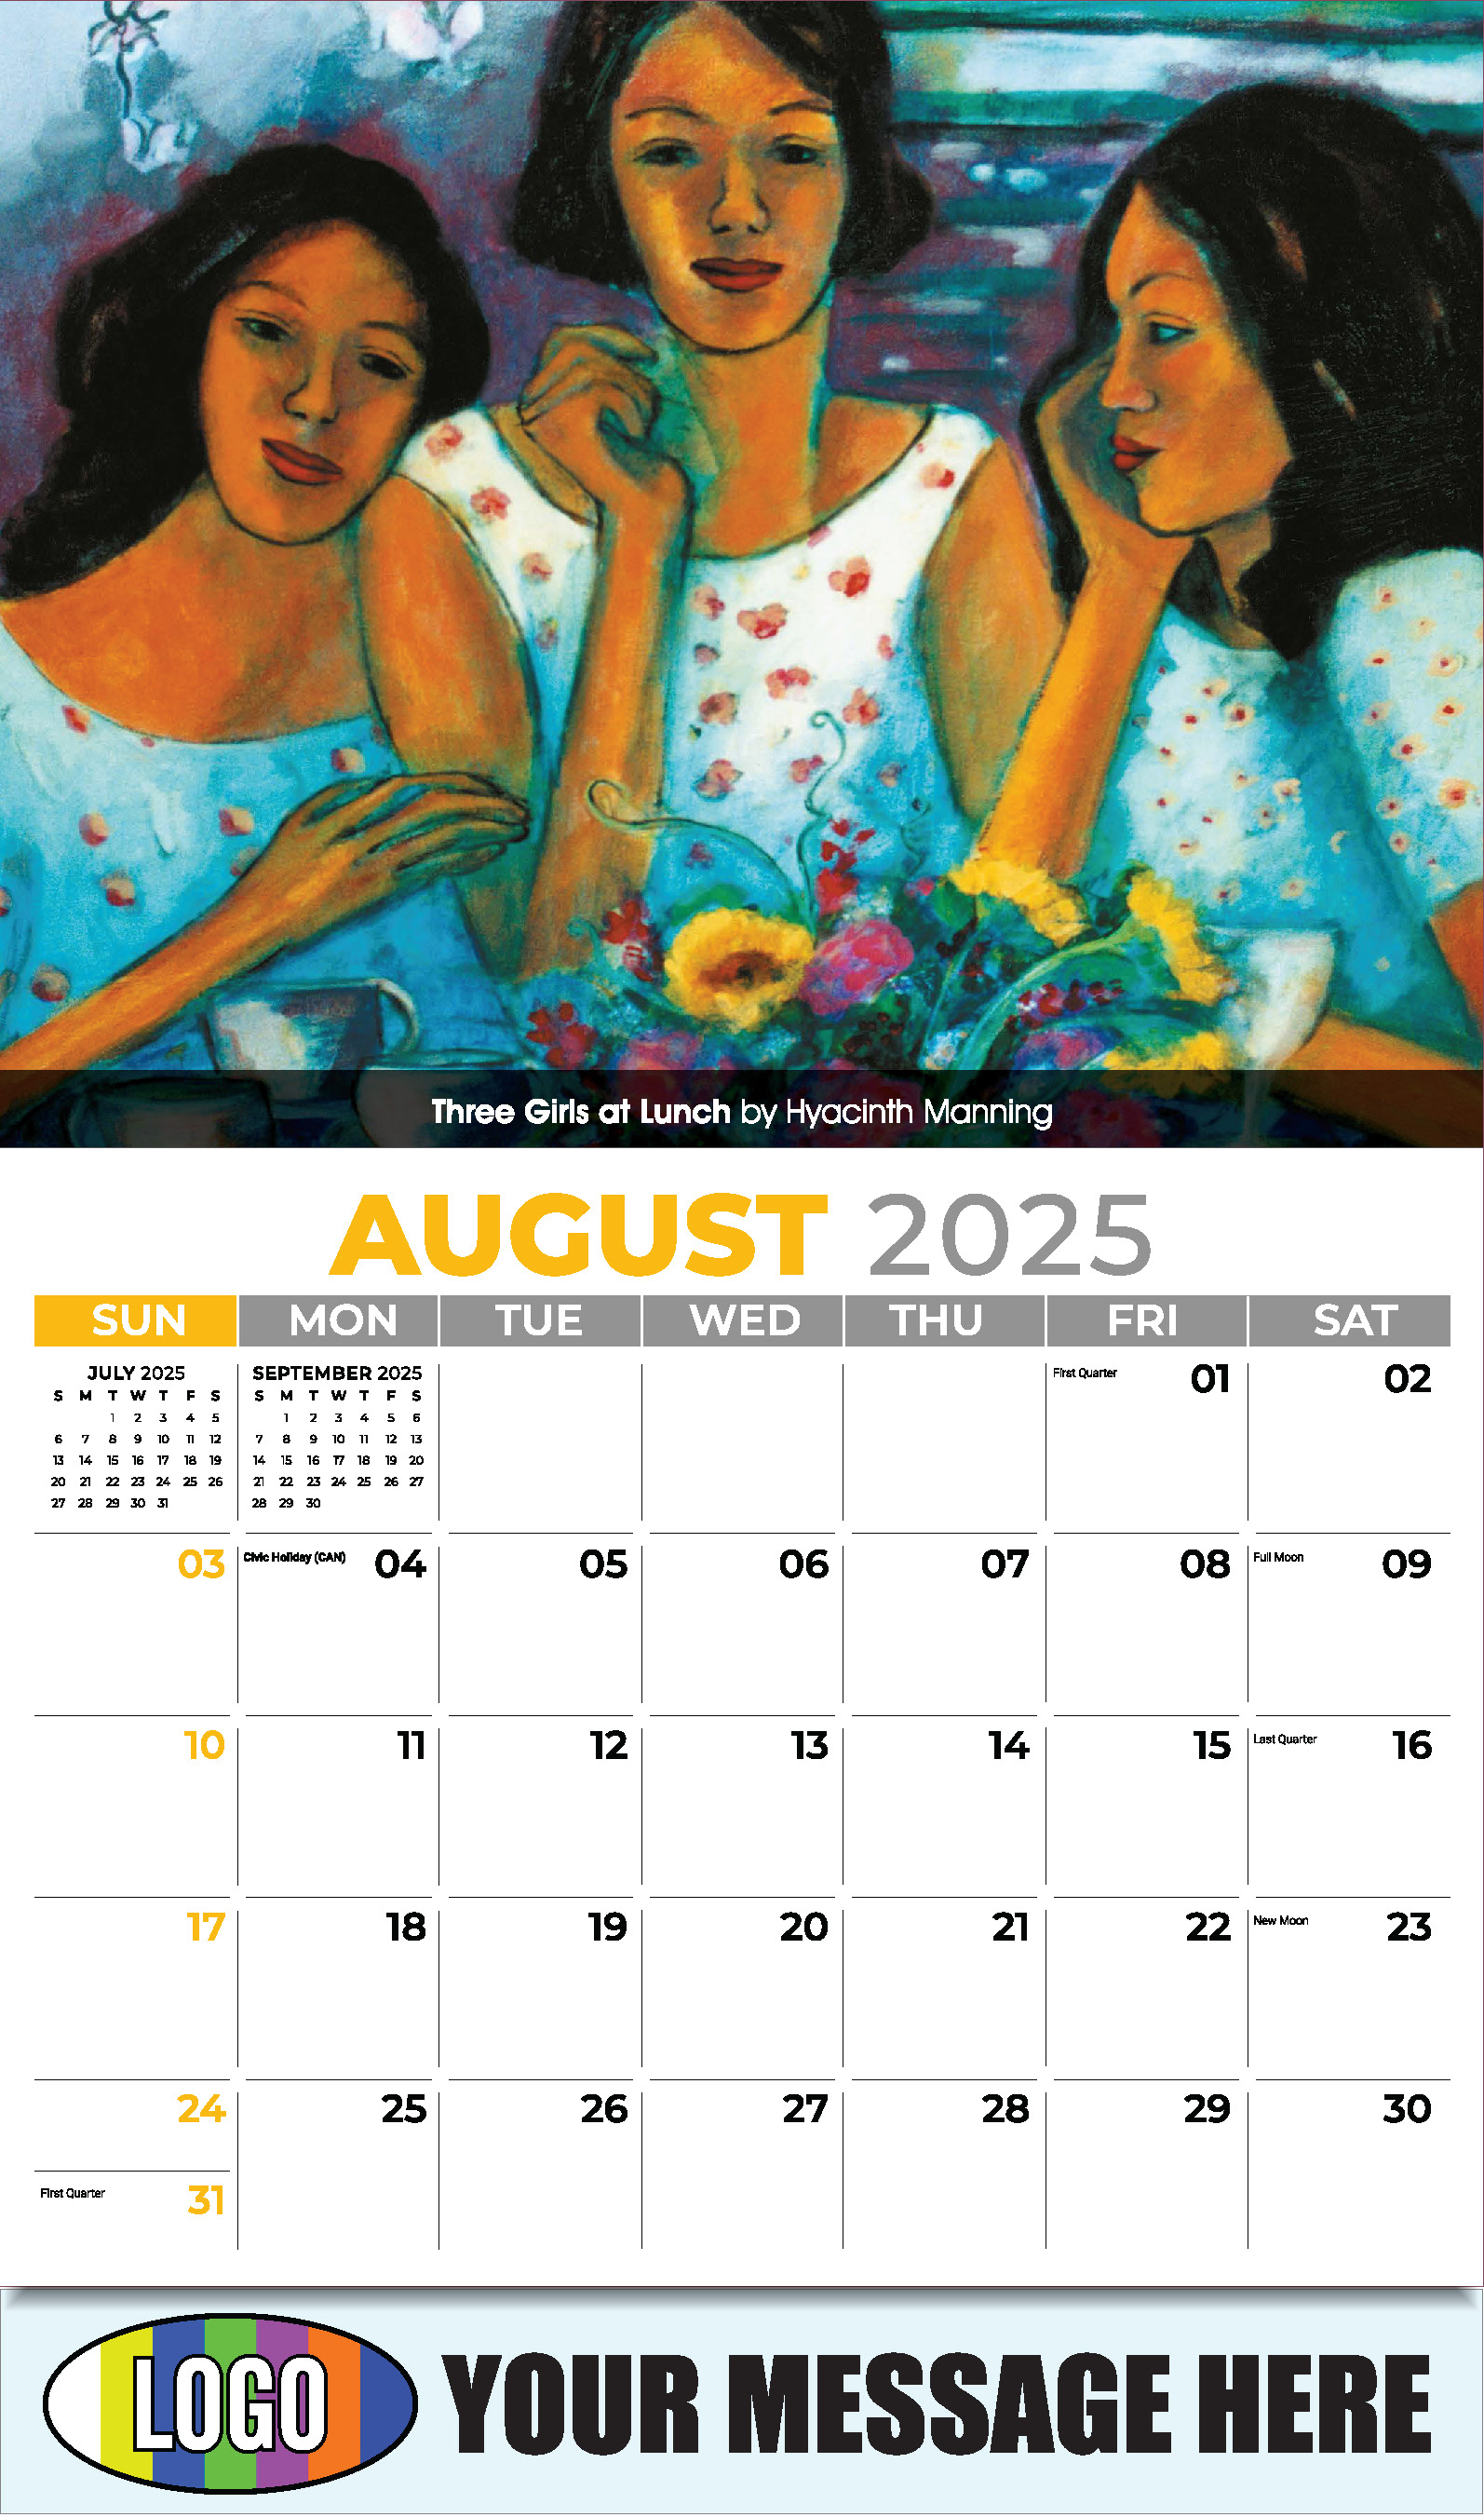 Celebration of African American Art 2025 Business Promotional Calendar - August